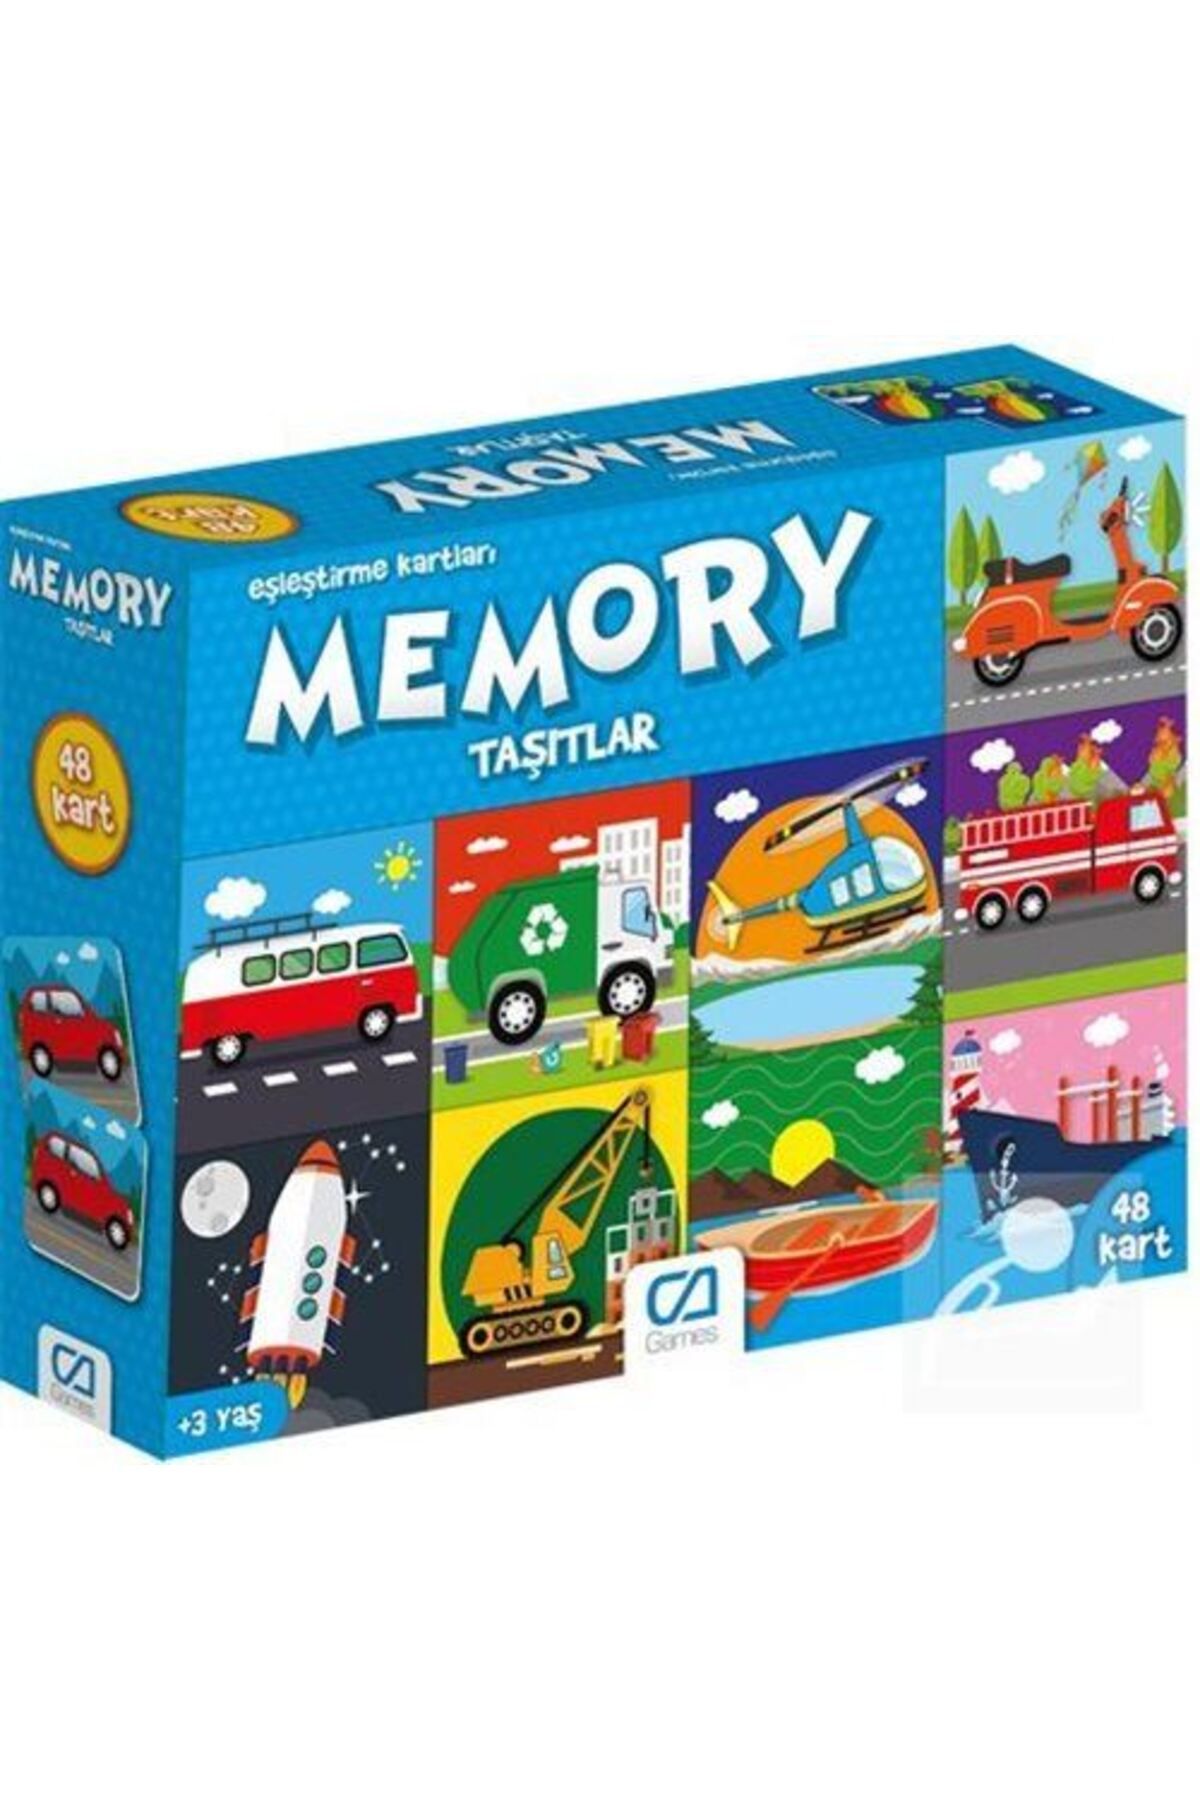 CA Games Memory Taşıtlar (CA.5038)